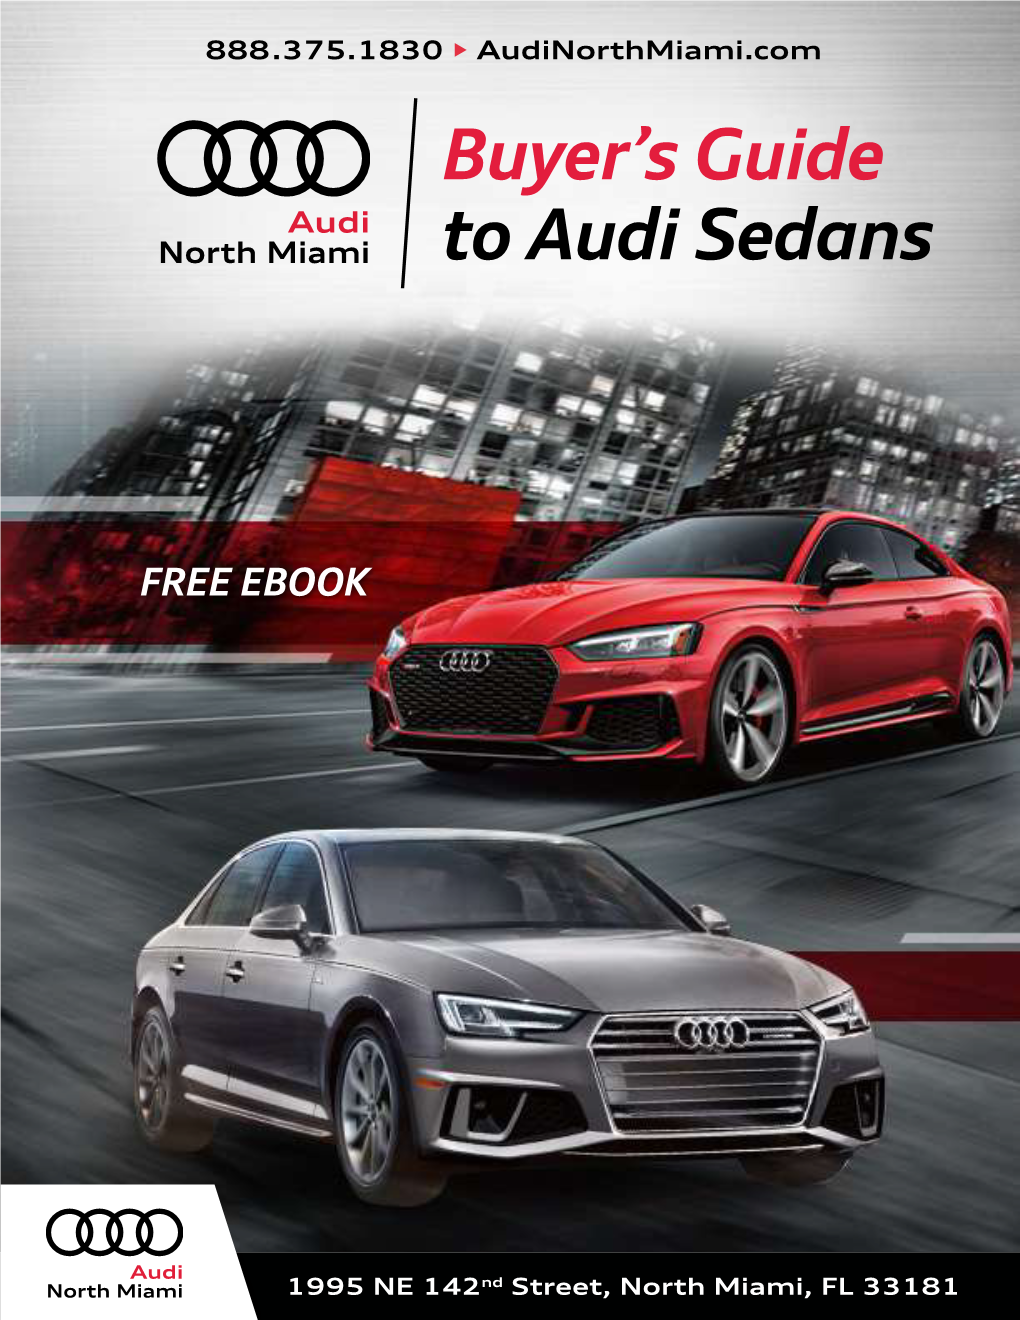 Buyer's Guide to Audi Sedans